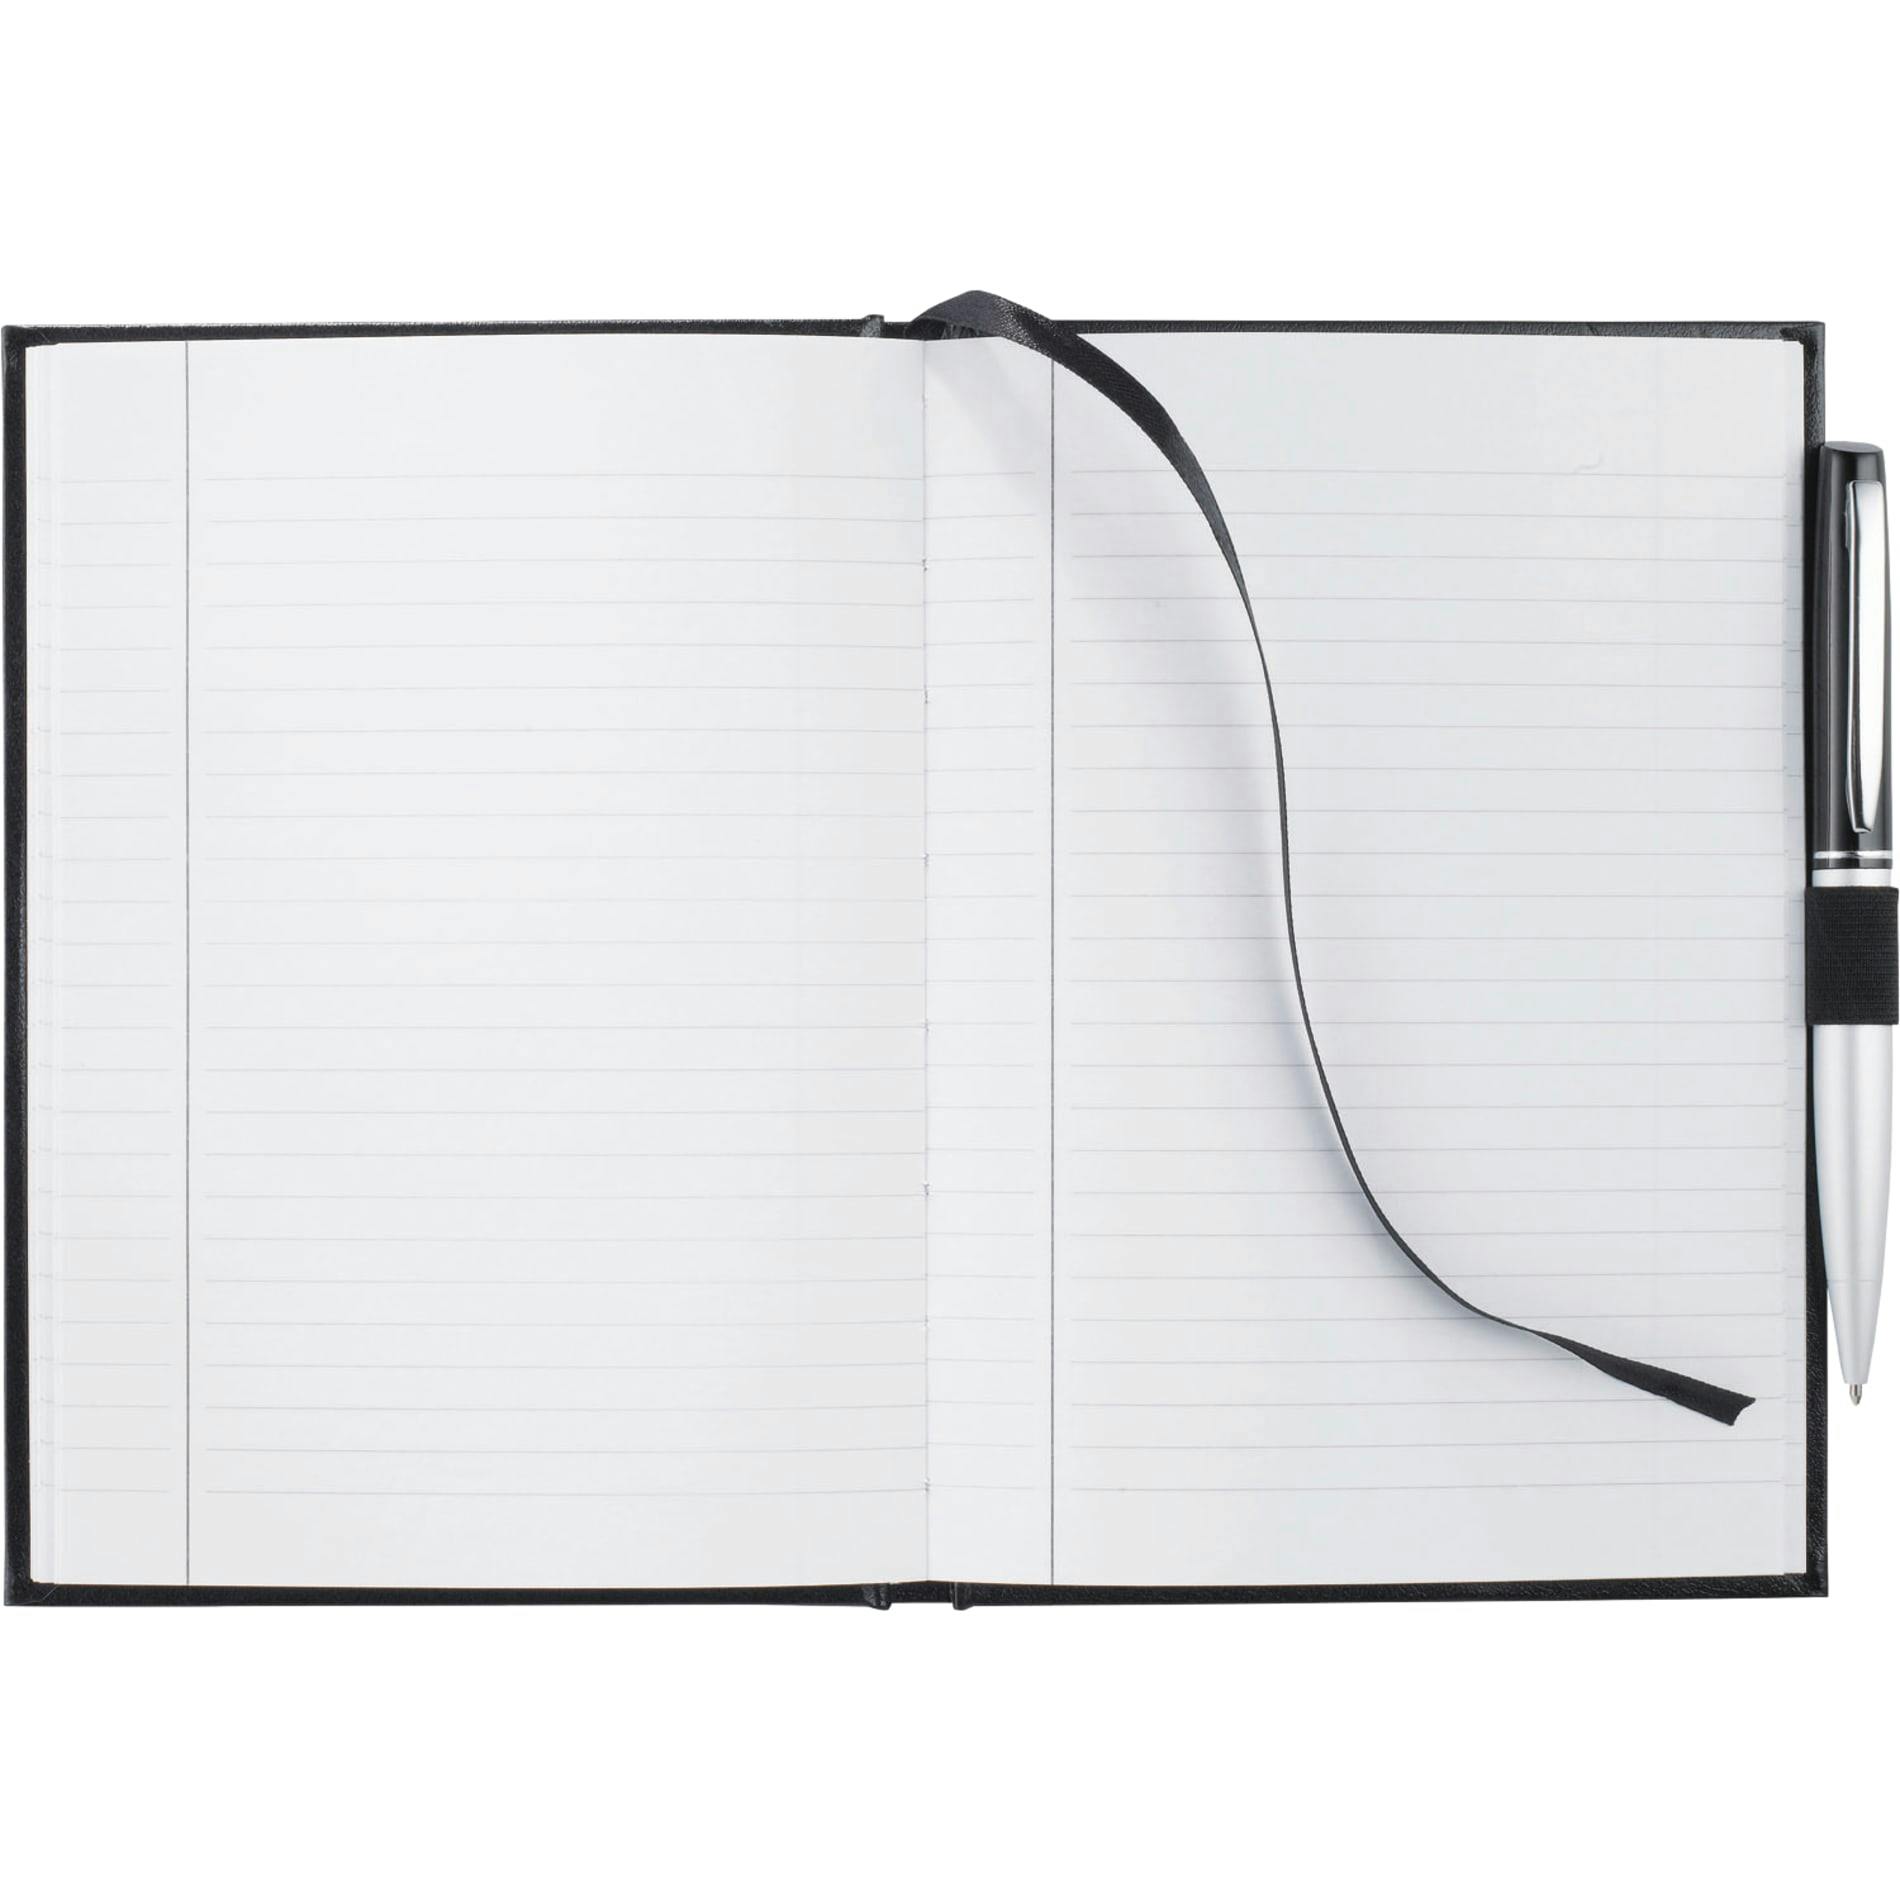 5" x 7" Executive Bound JournalBook® - additional Image 2